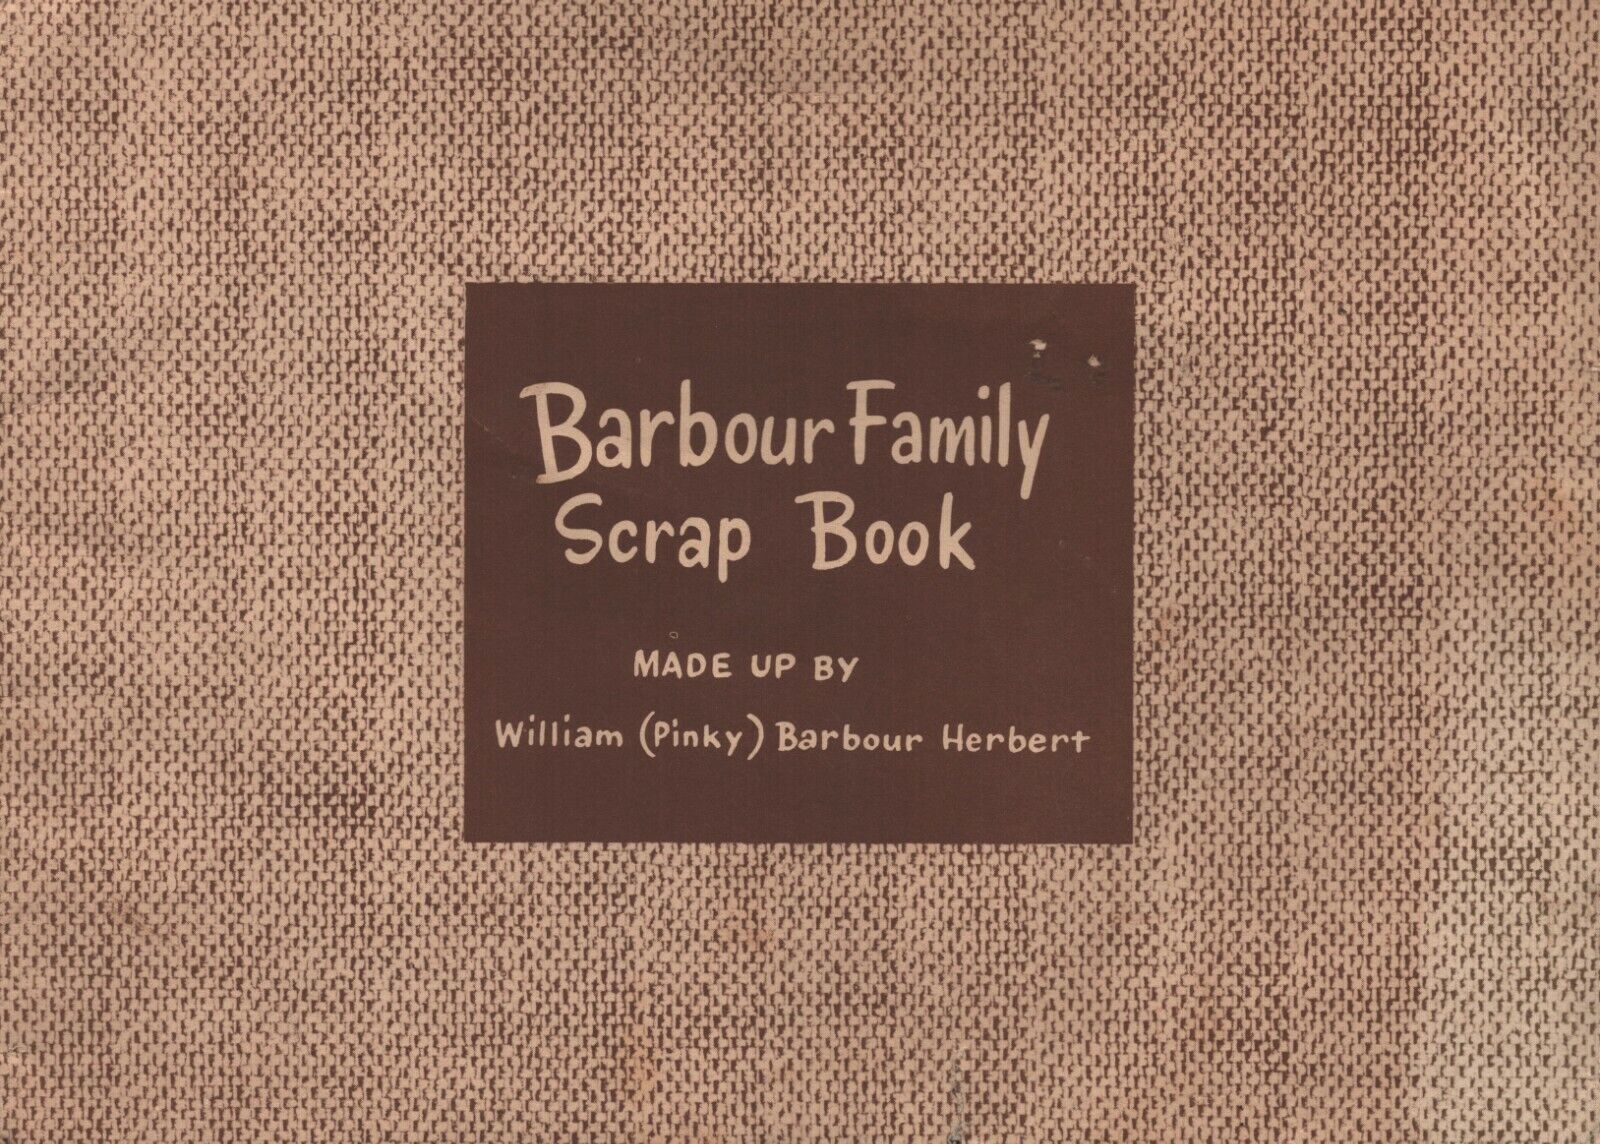 Barbour Family Scrap Book by William Pinky Barbour Herbert - 1946 - Seacliff CA